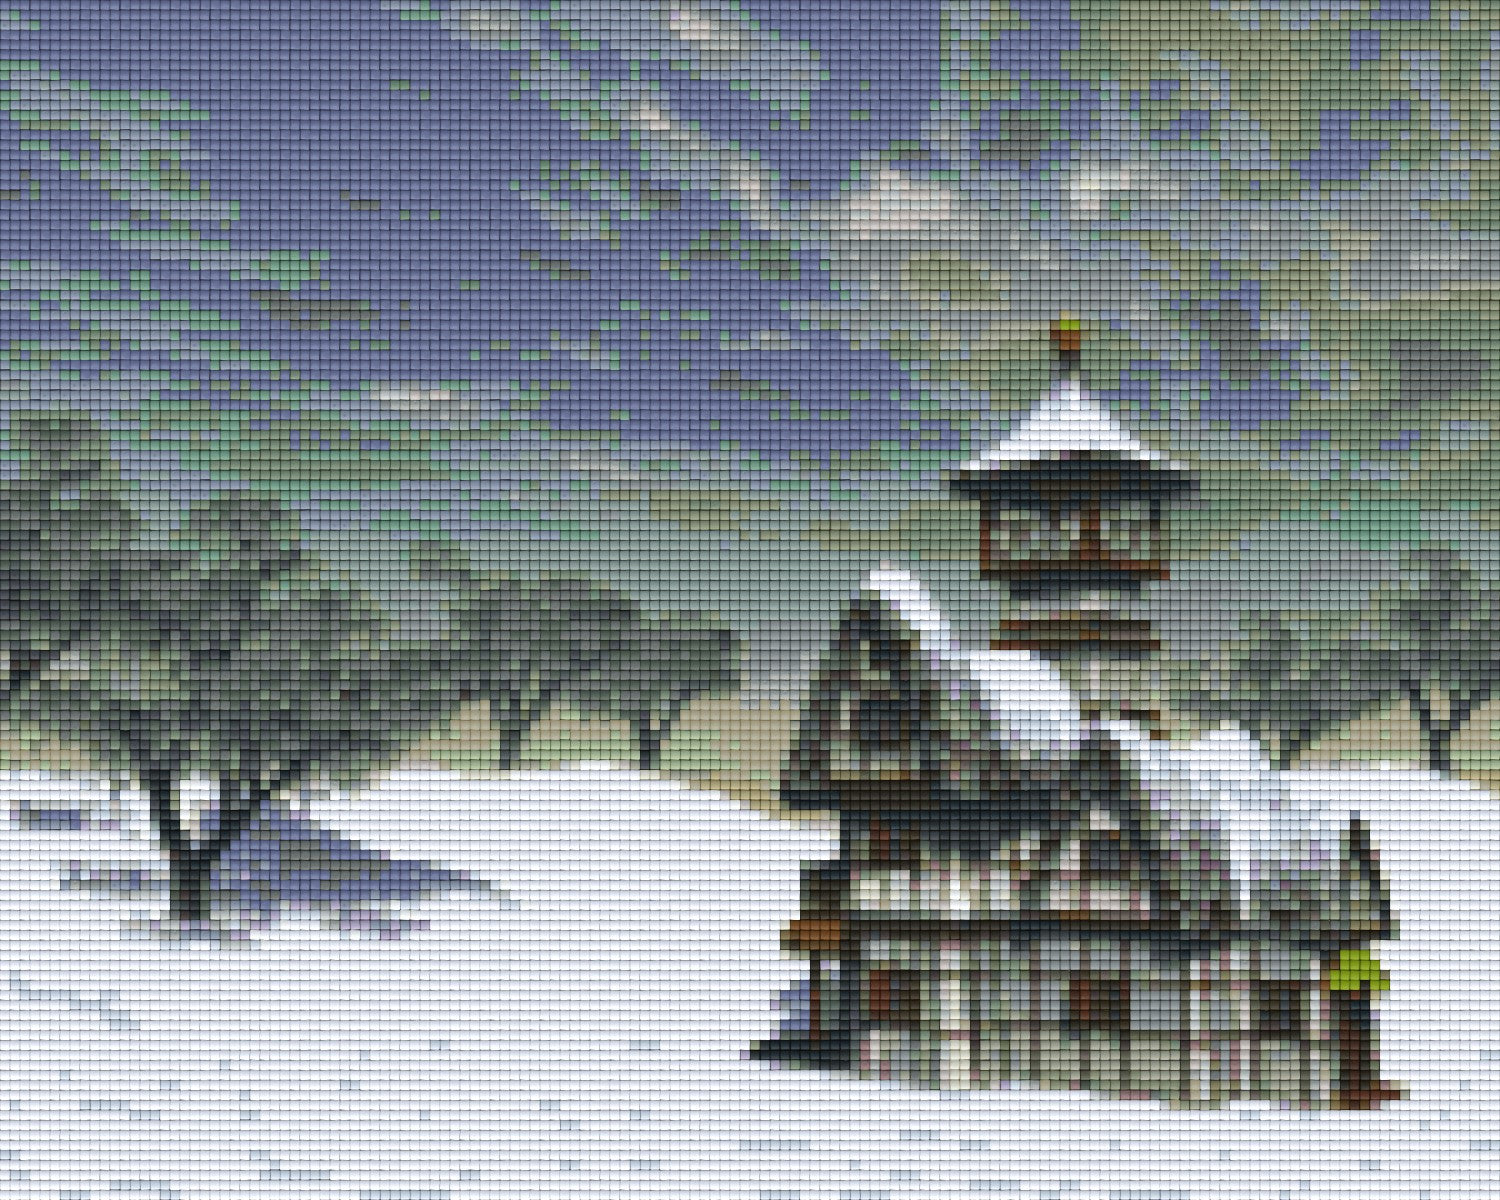 Pixelhobby classic set - fairytale house in the snow